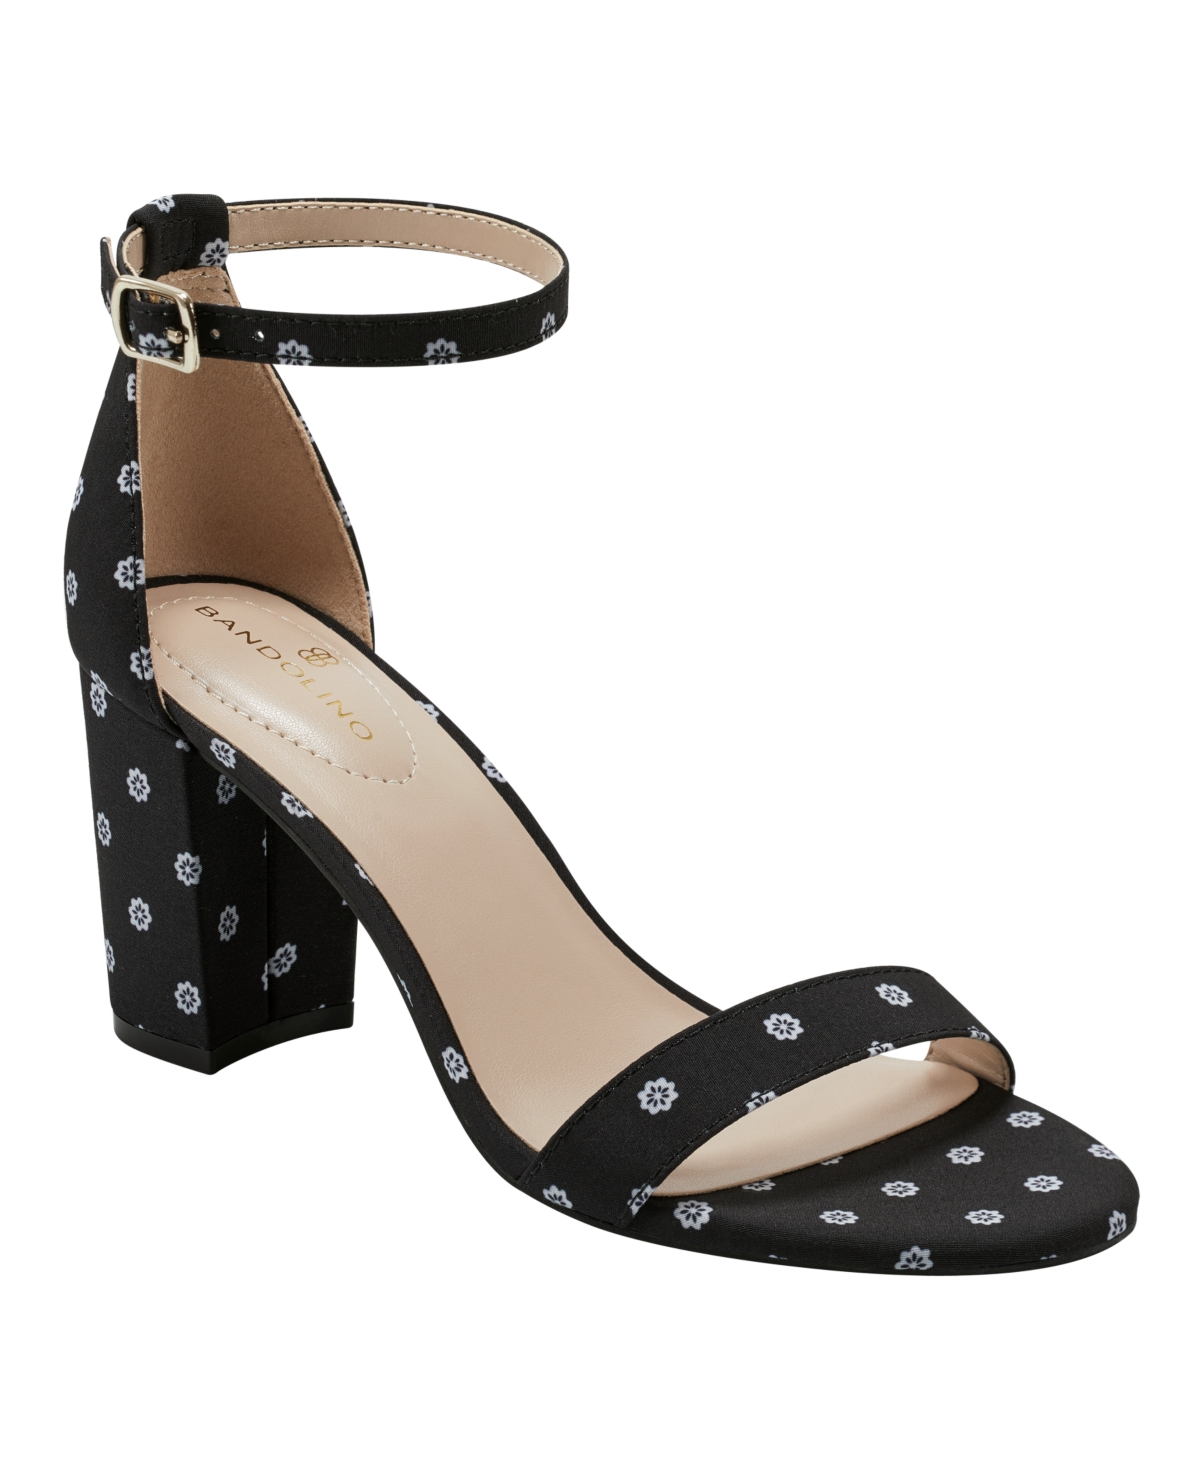 Bandolino Women's Armory Dress Sandals Women's Shoes In Black/white Polka Daisy